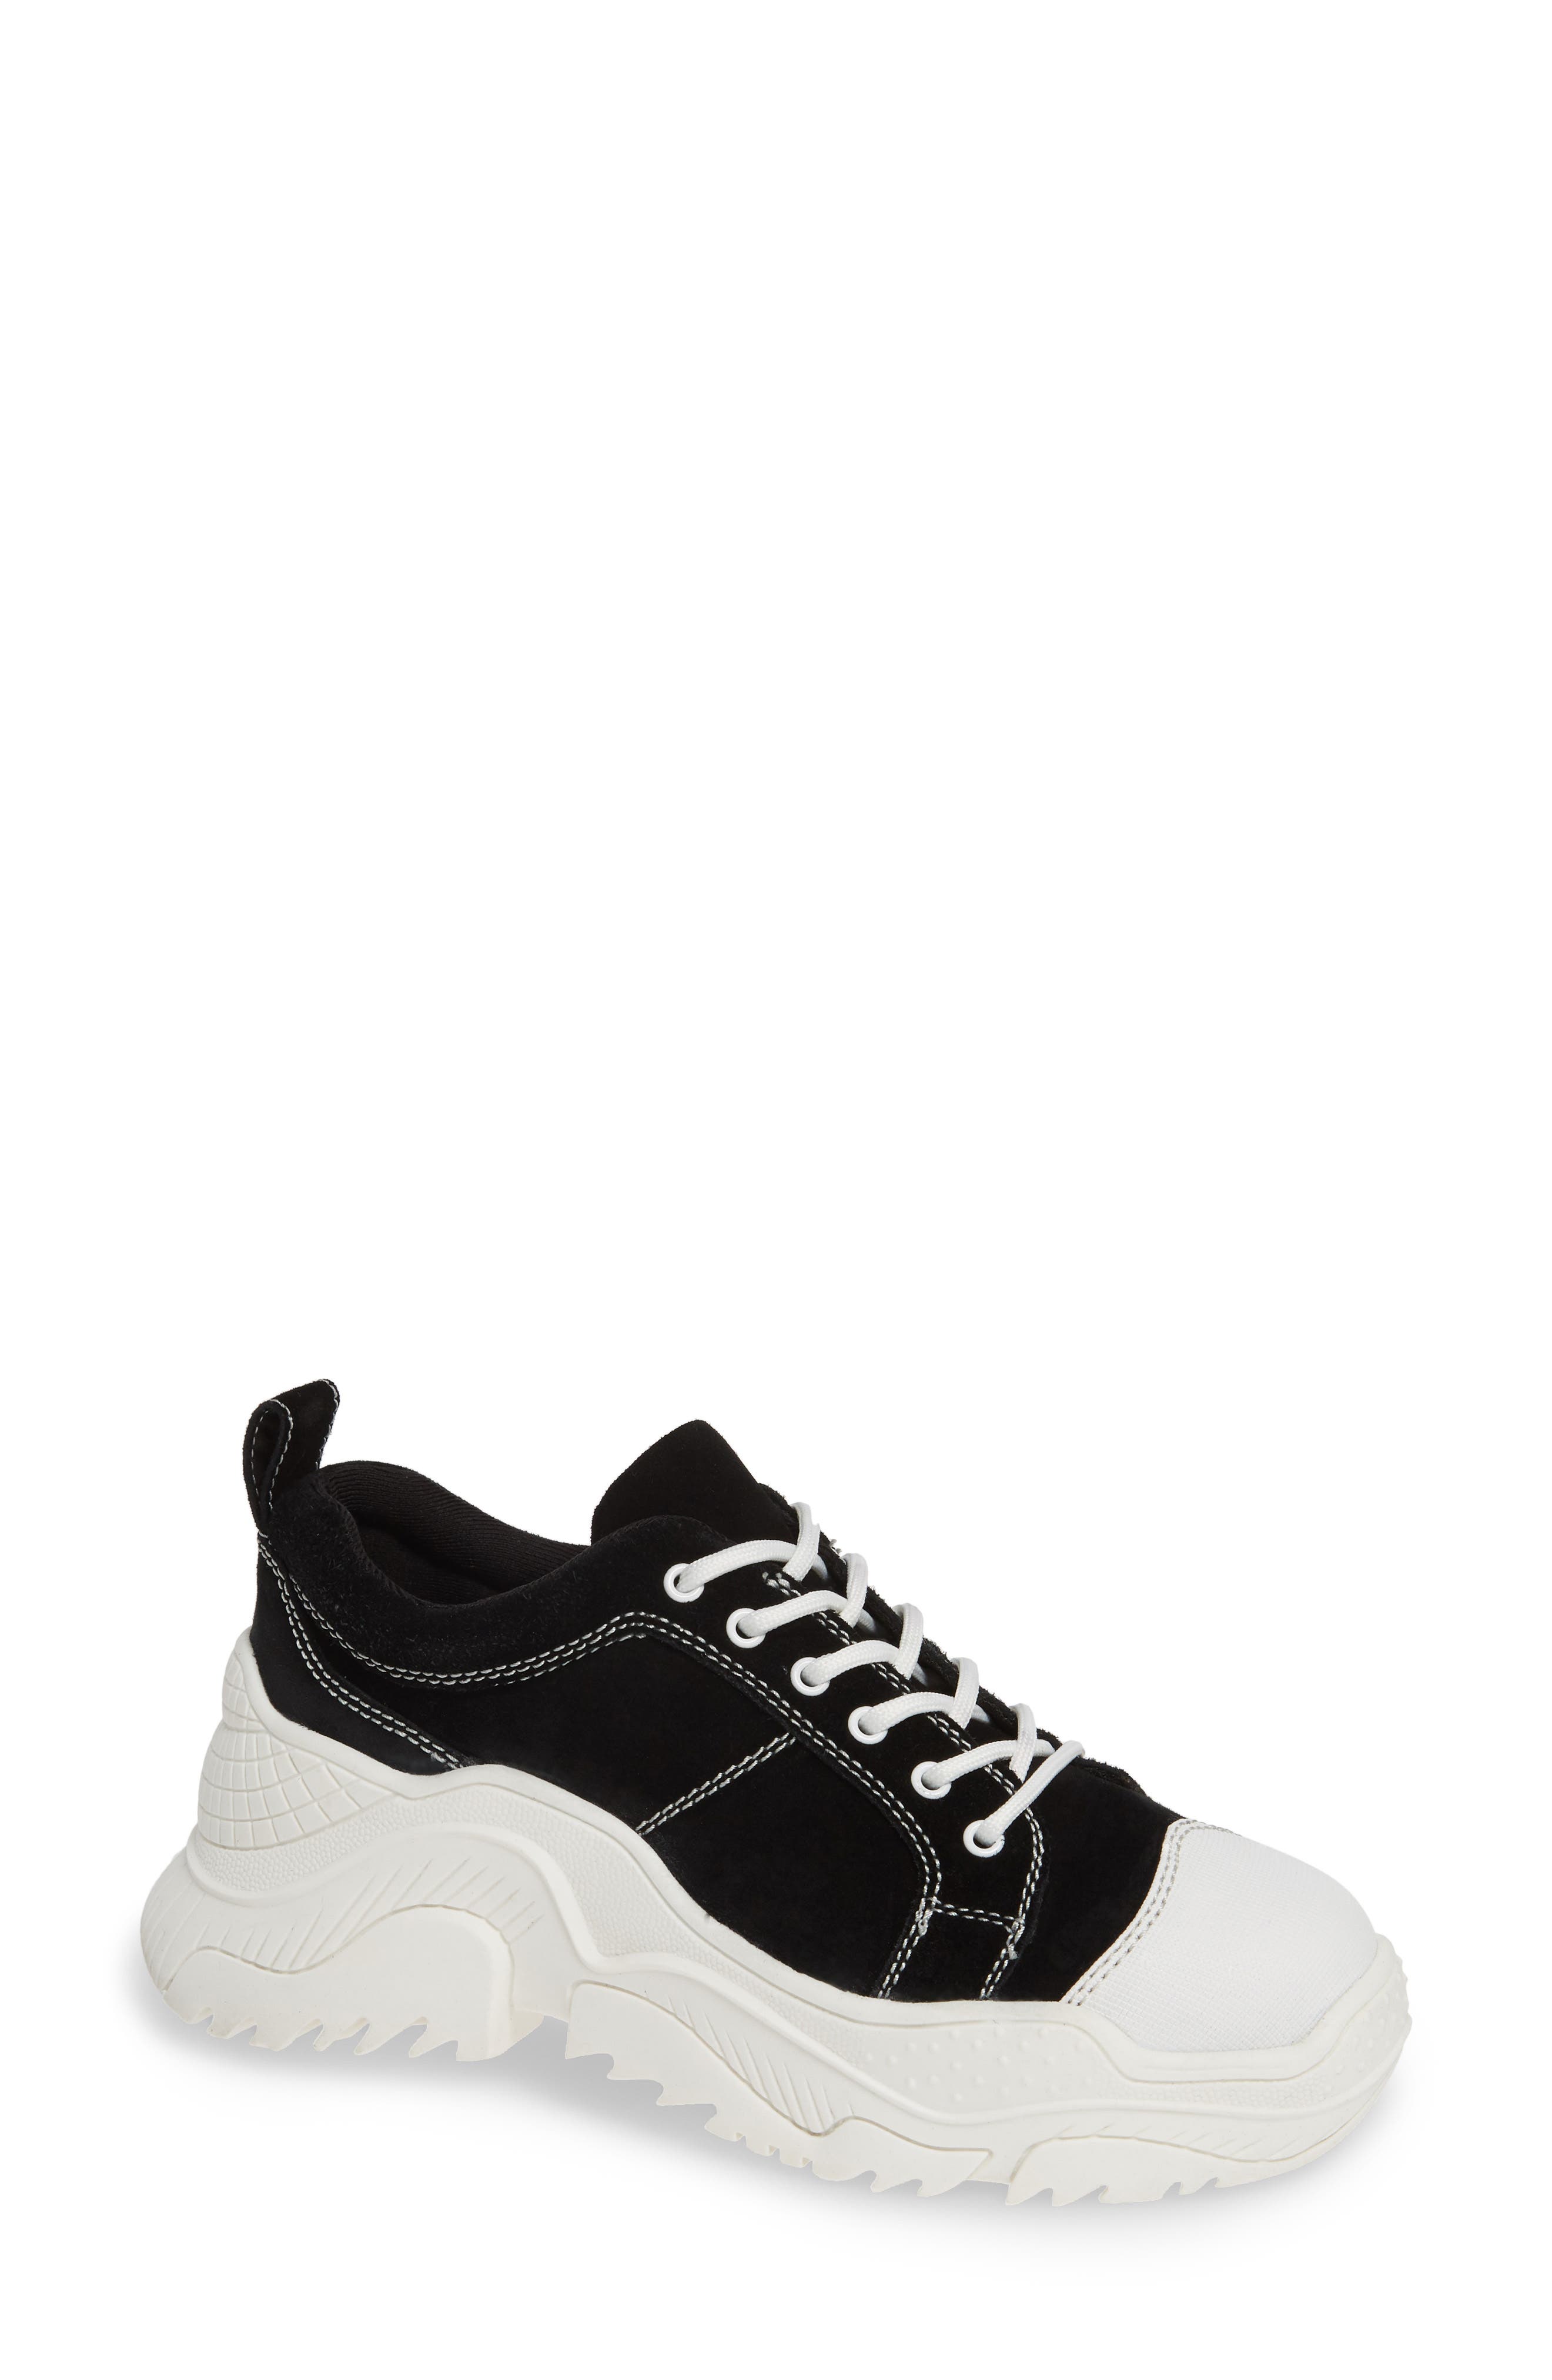 jeffrey campbell sneakers black